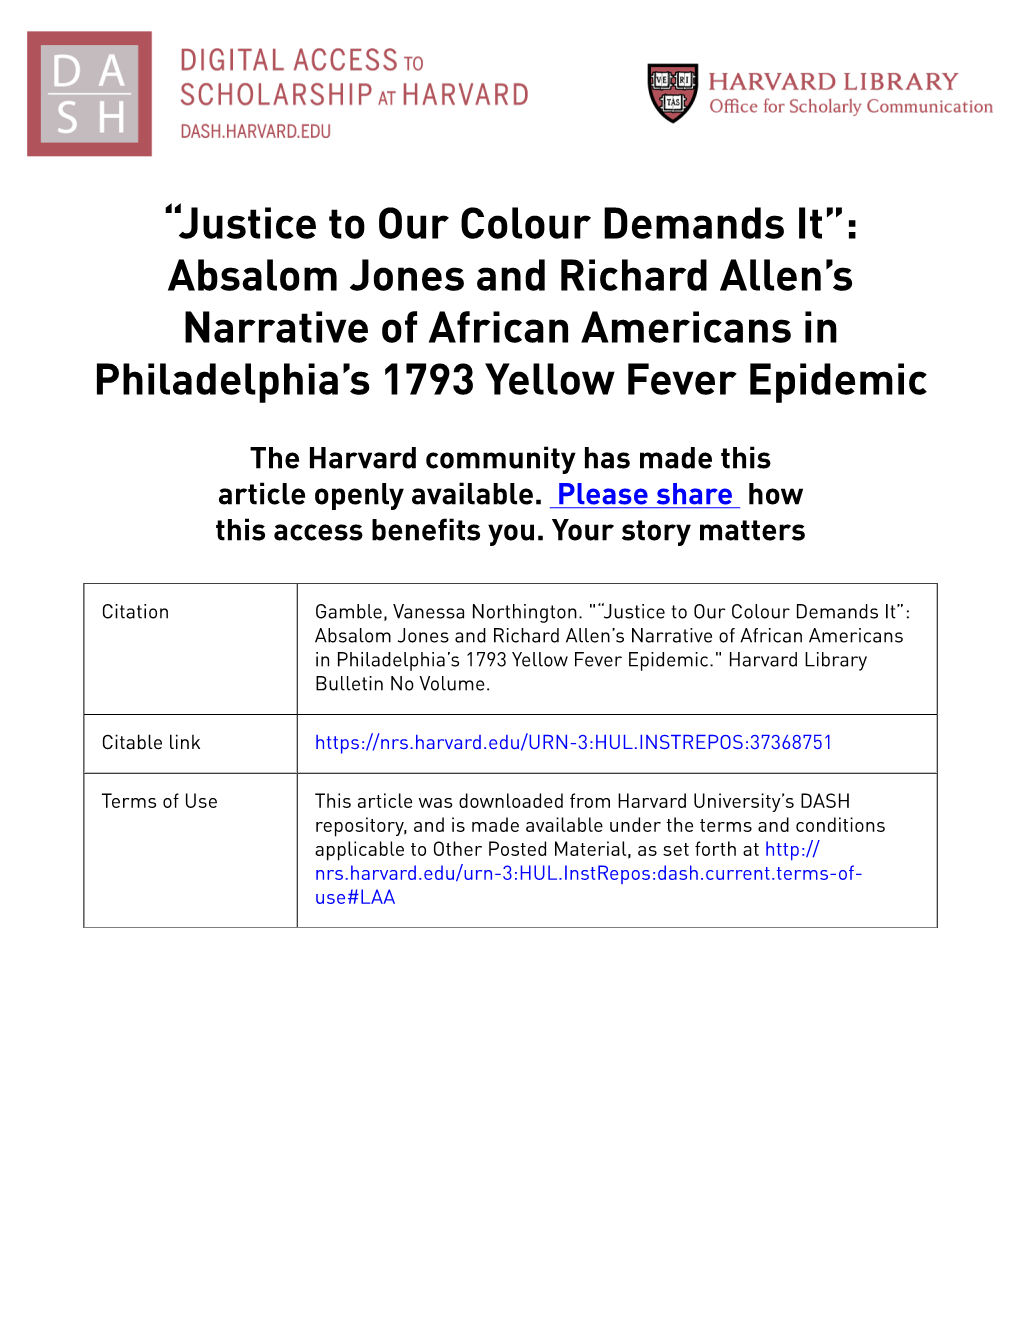 Absalom Jones and Richard Allen's Narrative of African Americans In